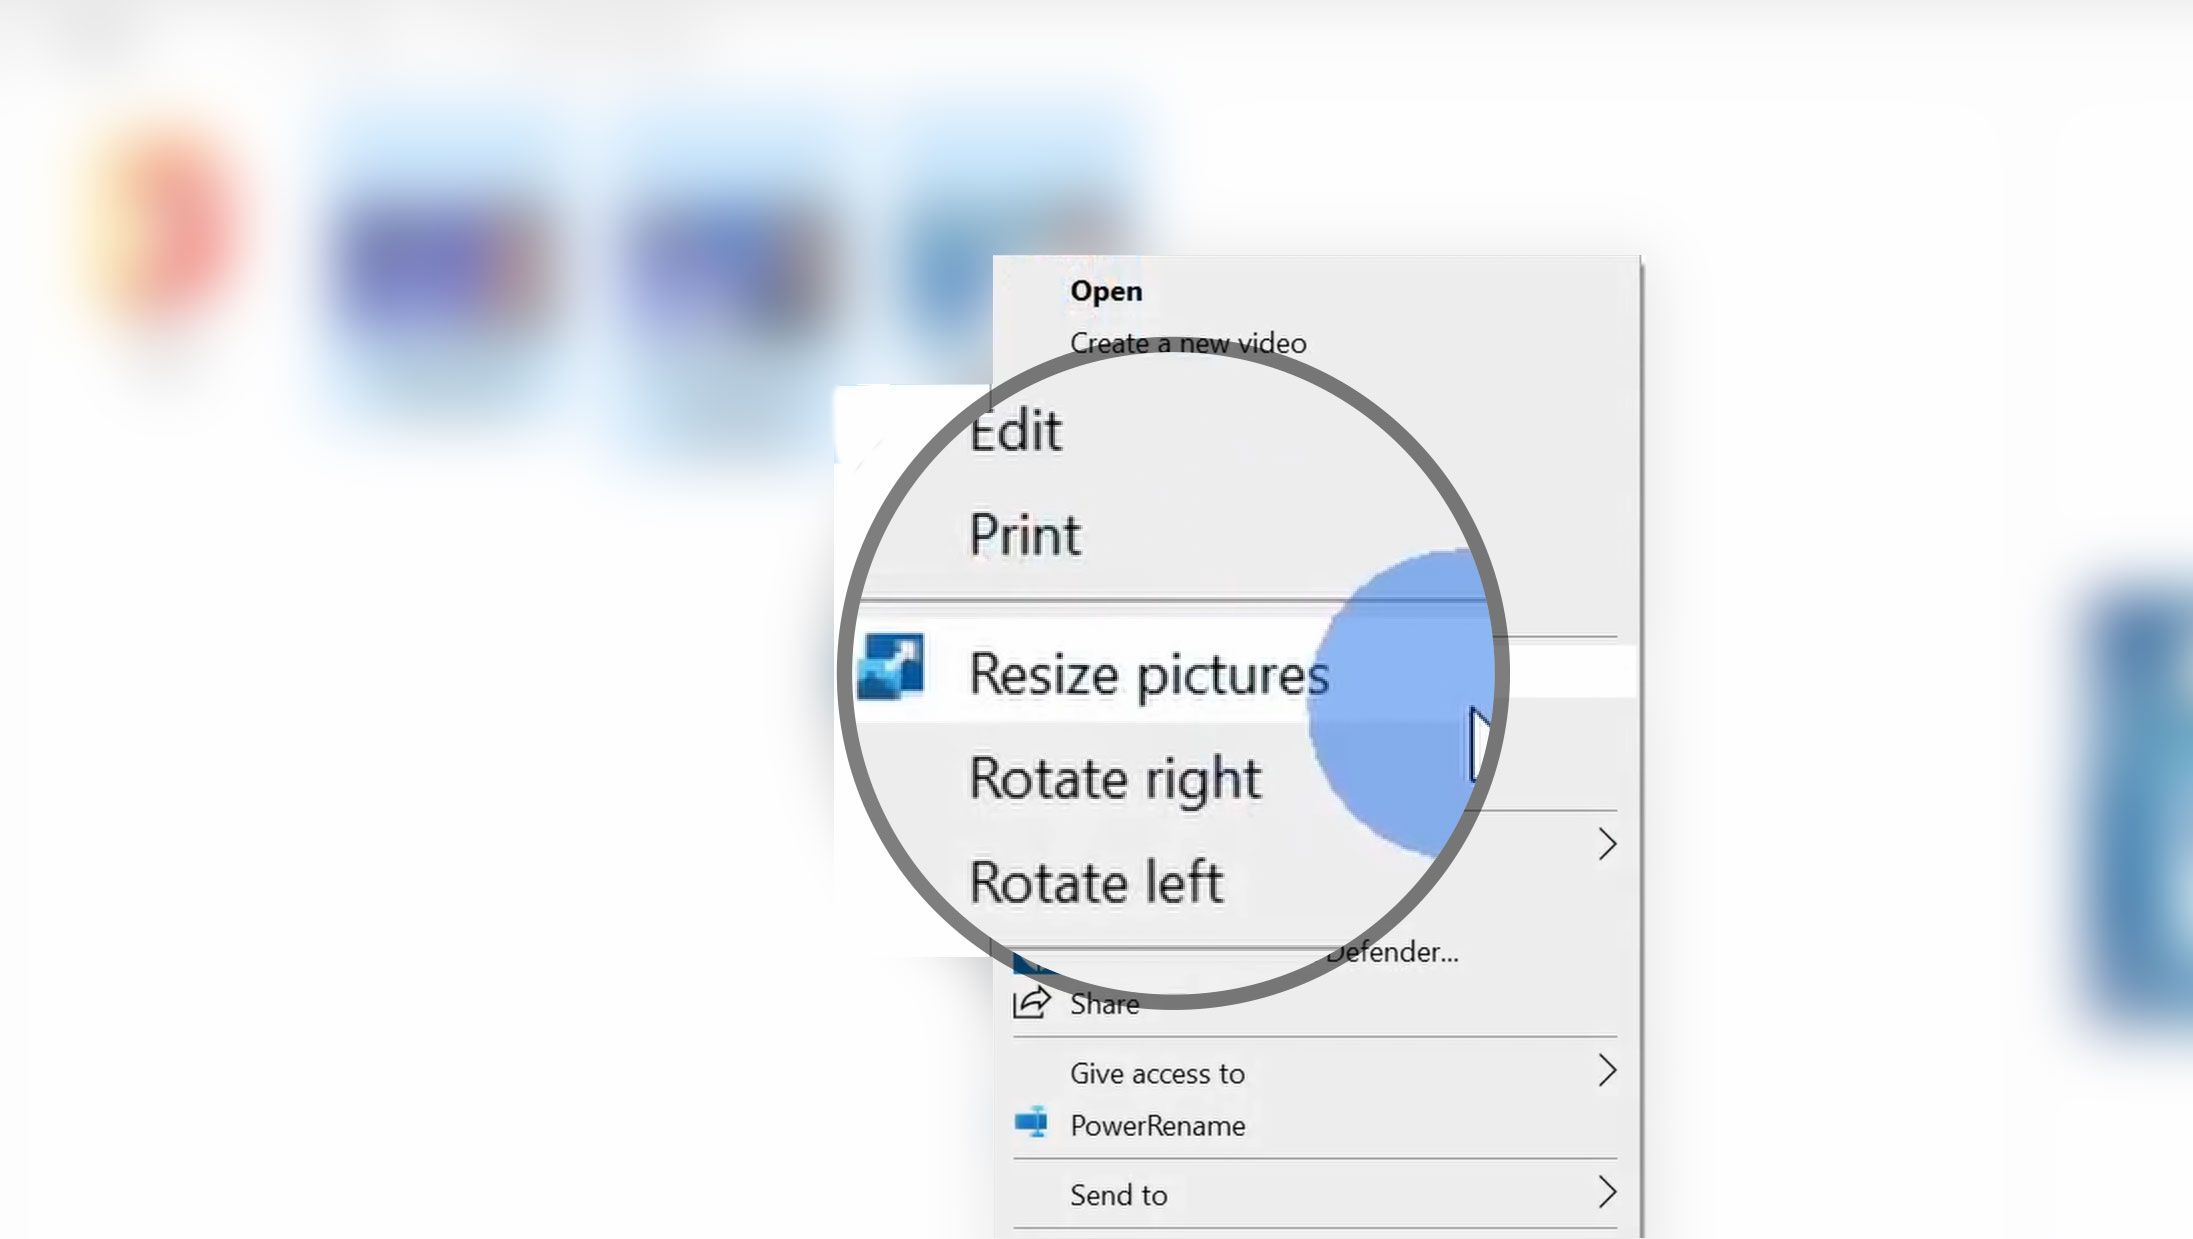 Microsoft Powertoy image you want to resize..